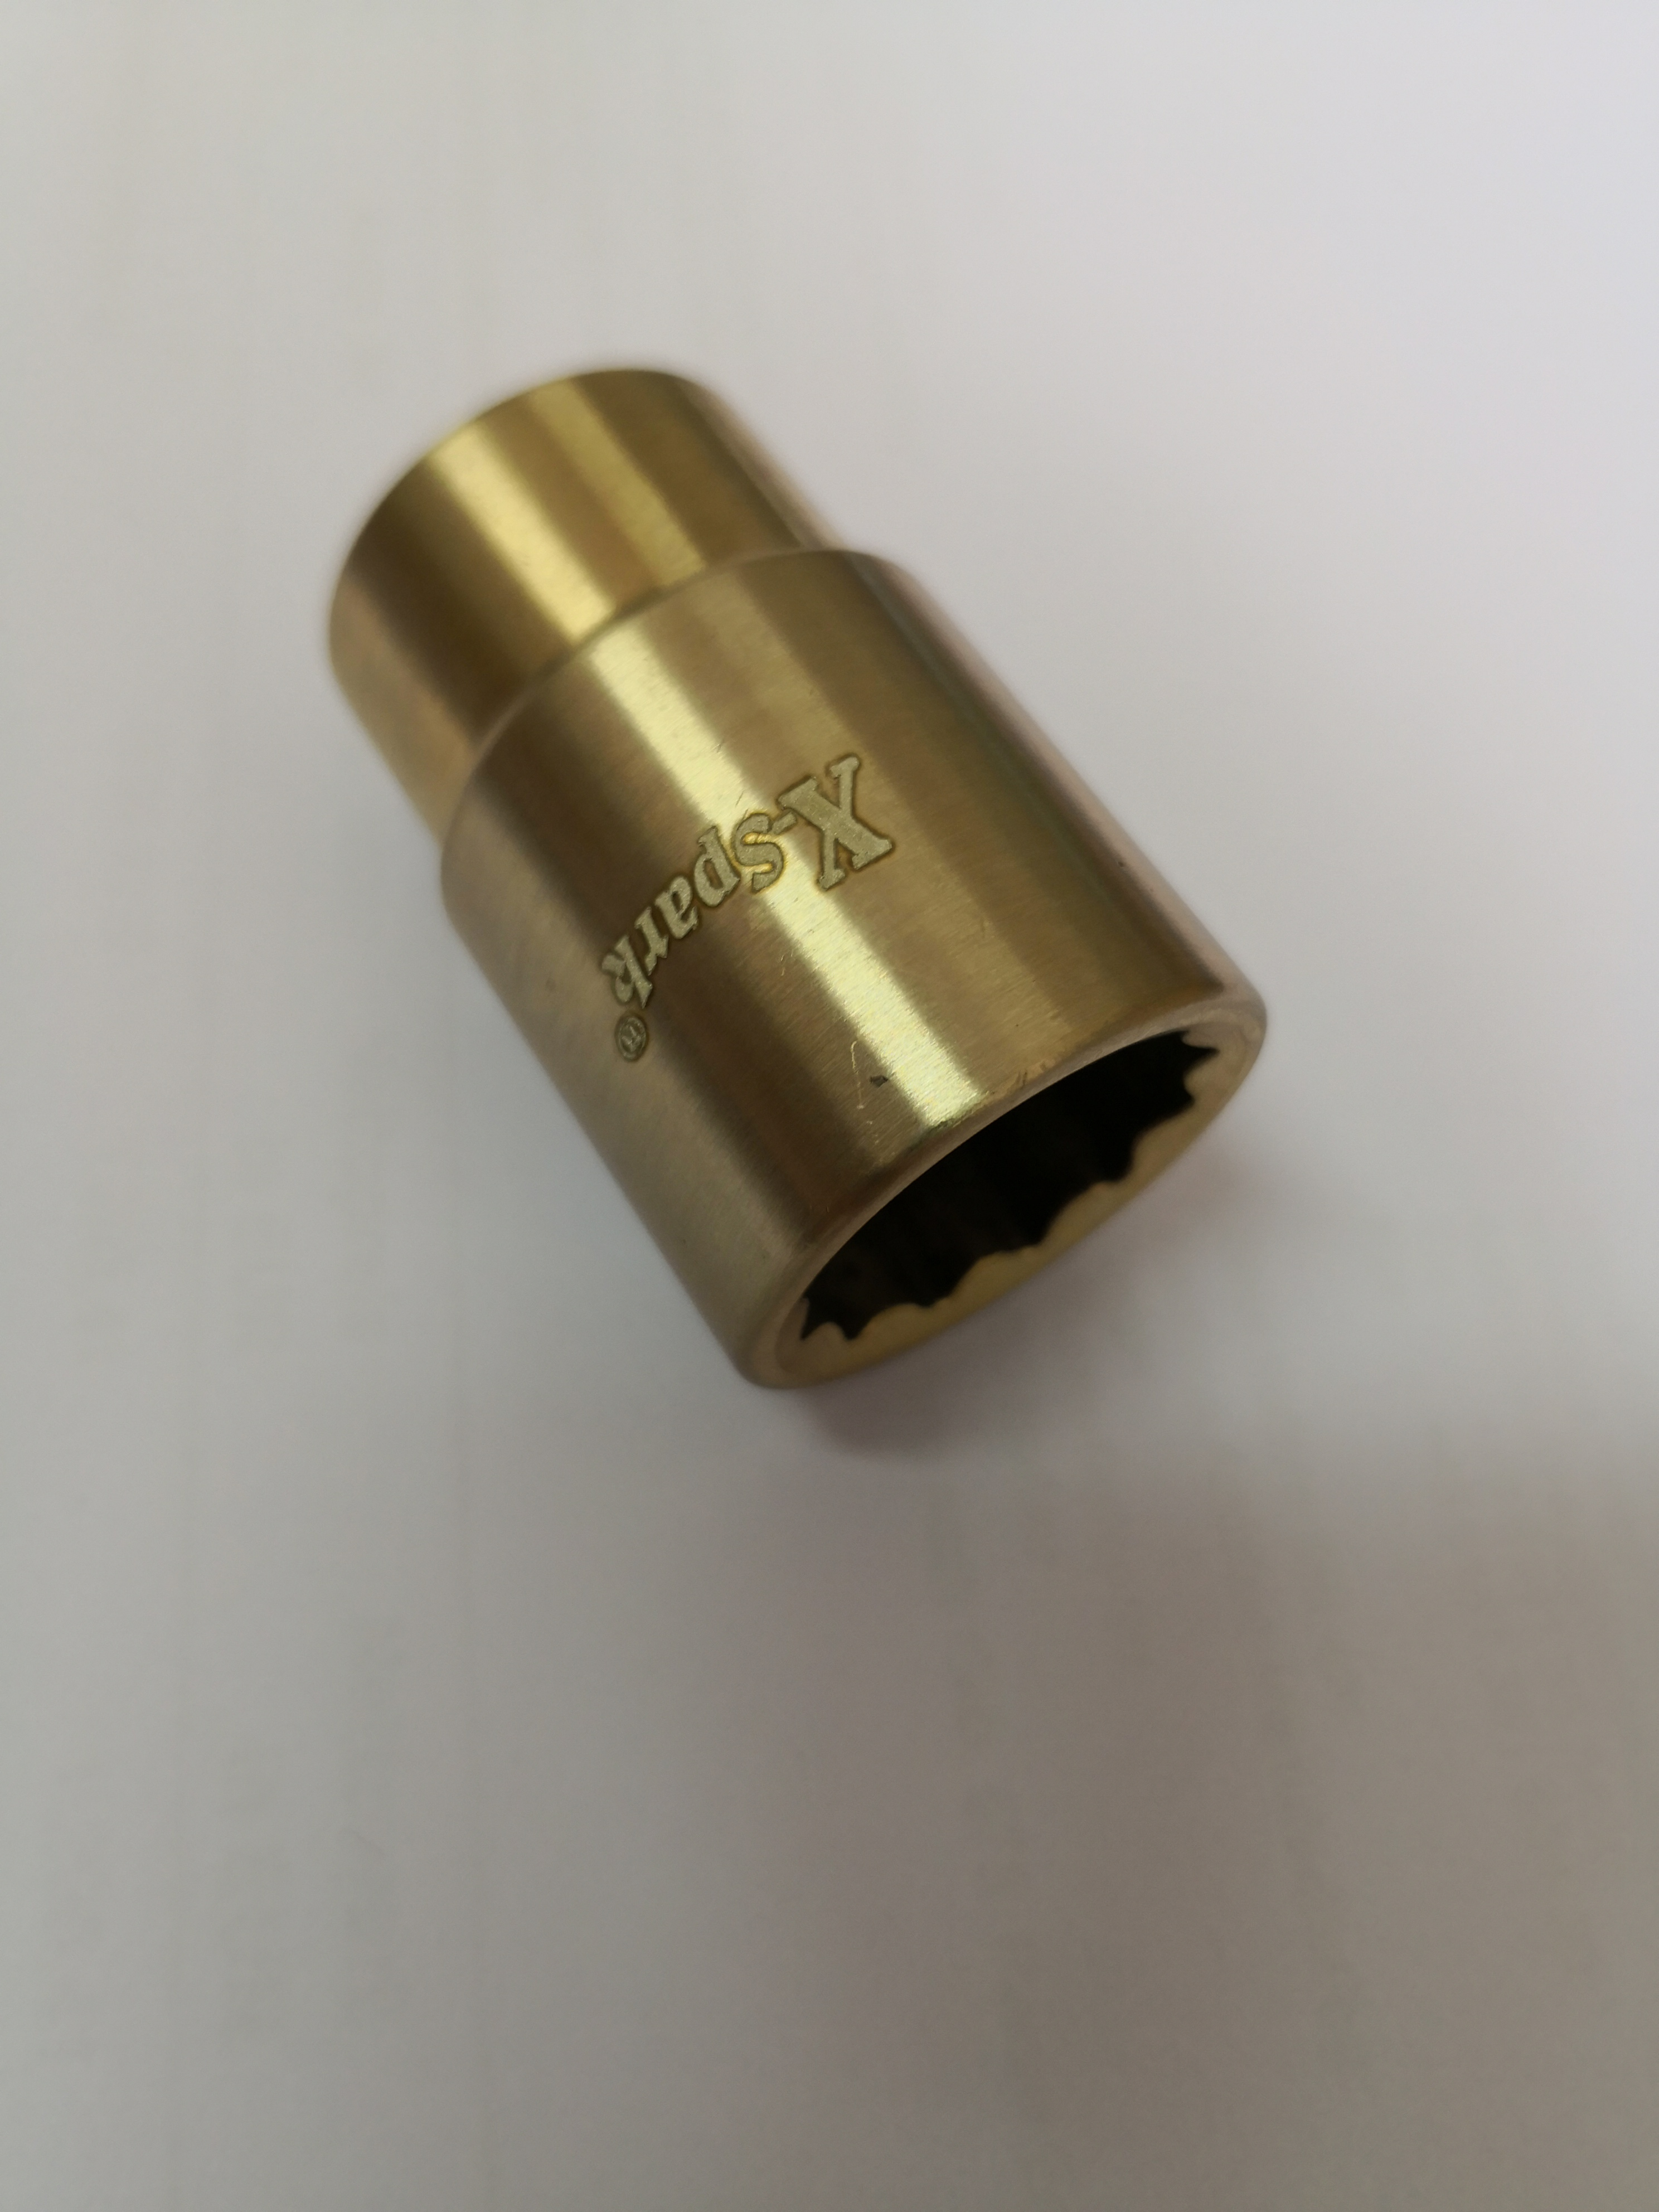 Socket 1/4 13 mm- non-sparking / low-sparking